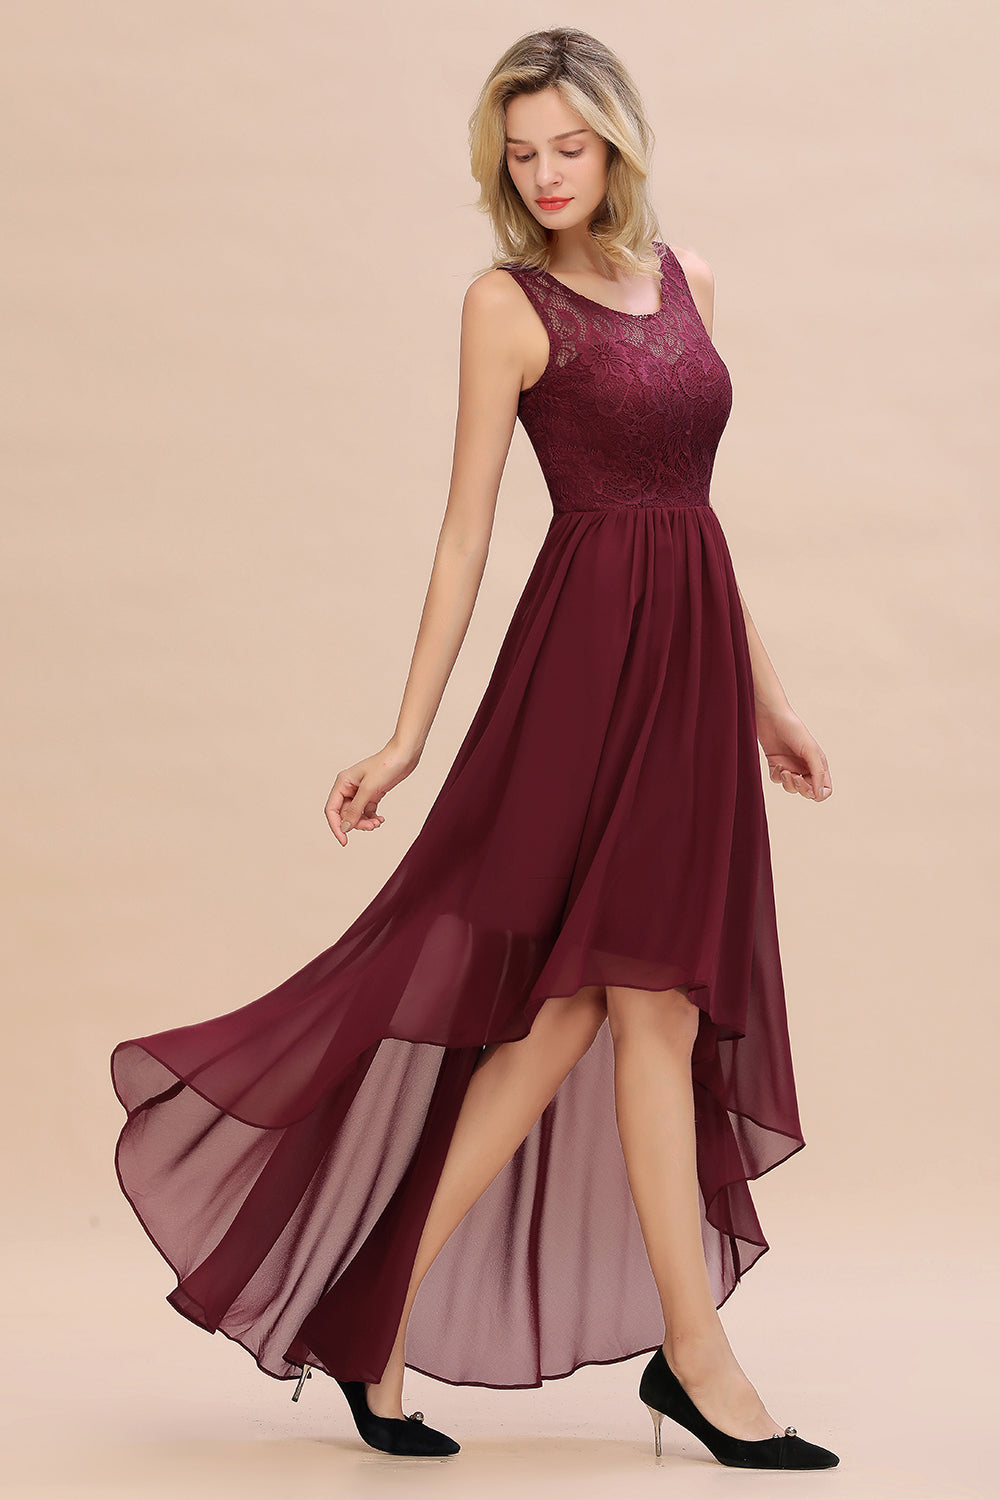 Affordable Hi-Lo Lace Sleeveless Burgundy Chiffon Bridesmaid Dress Online-27dress